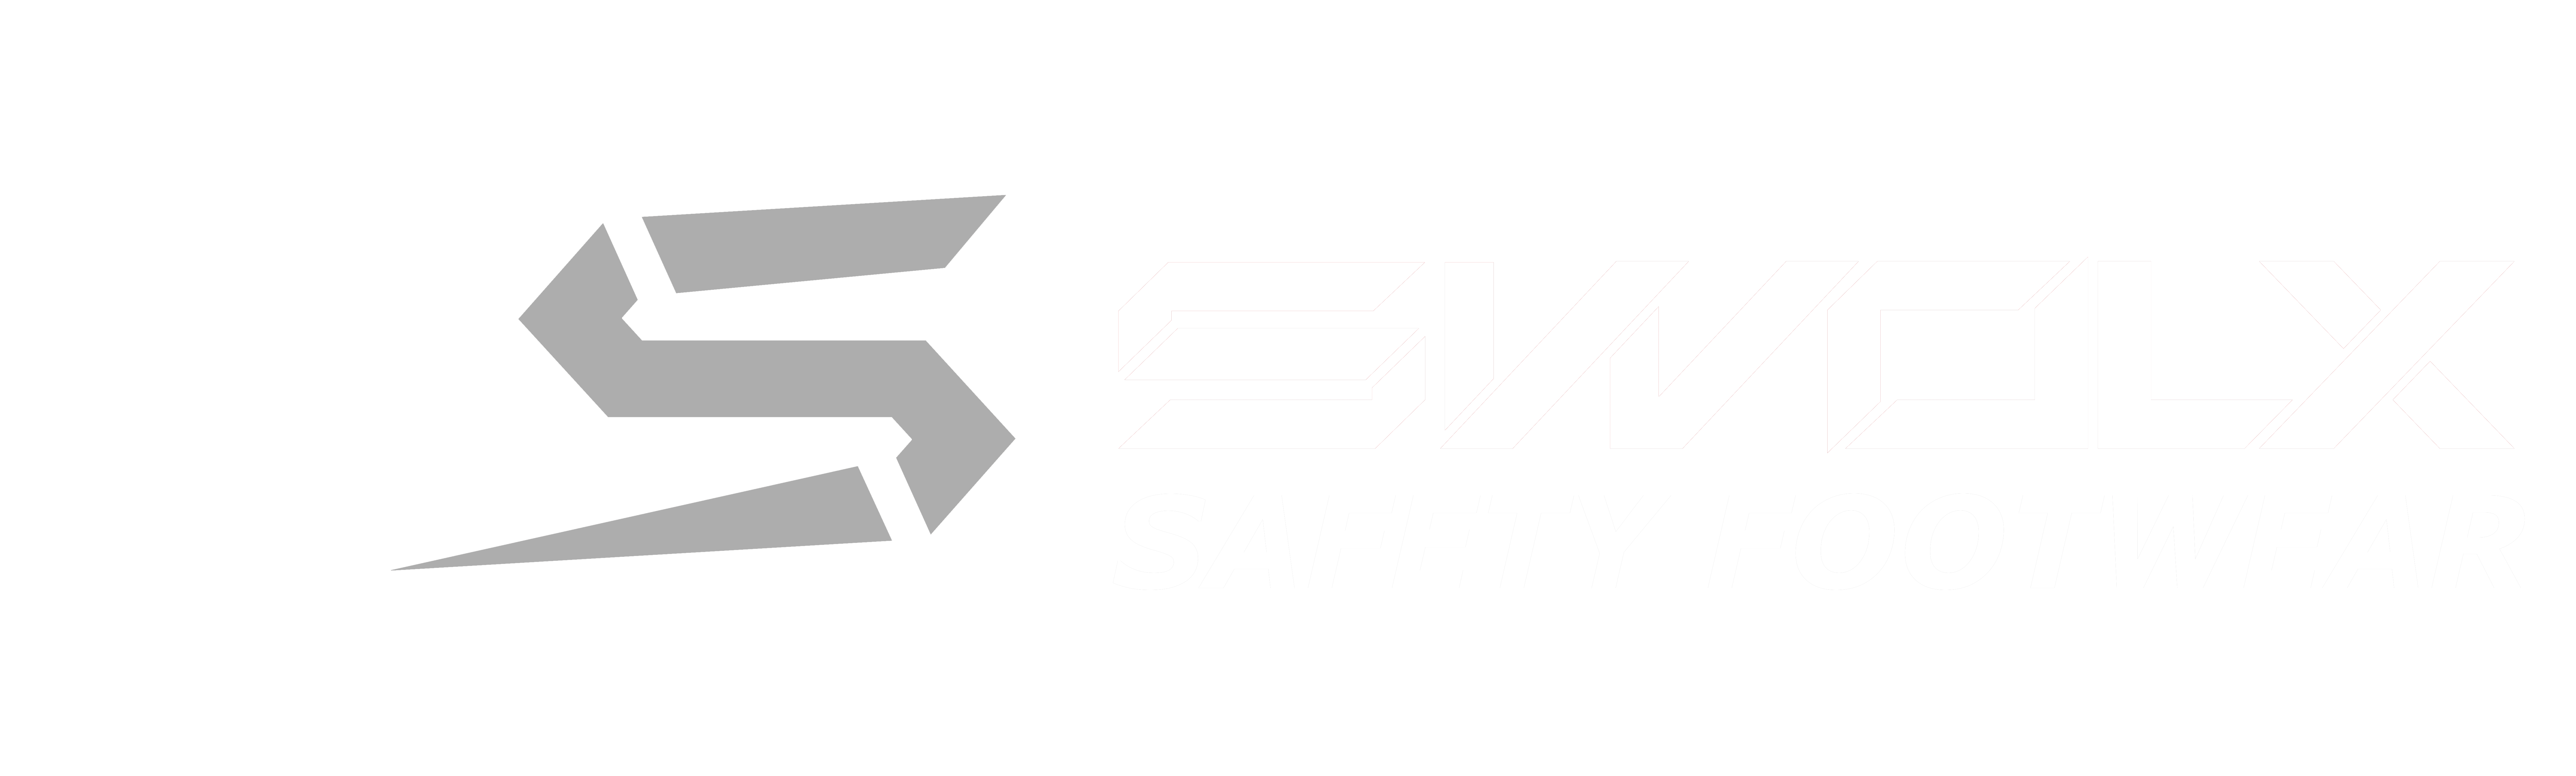 Swolx Safety Footwear